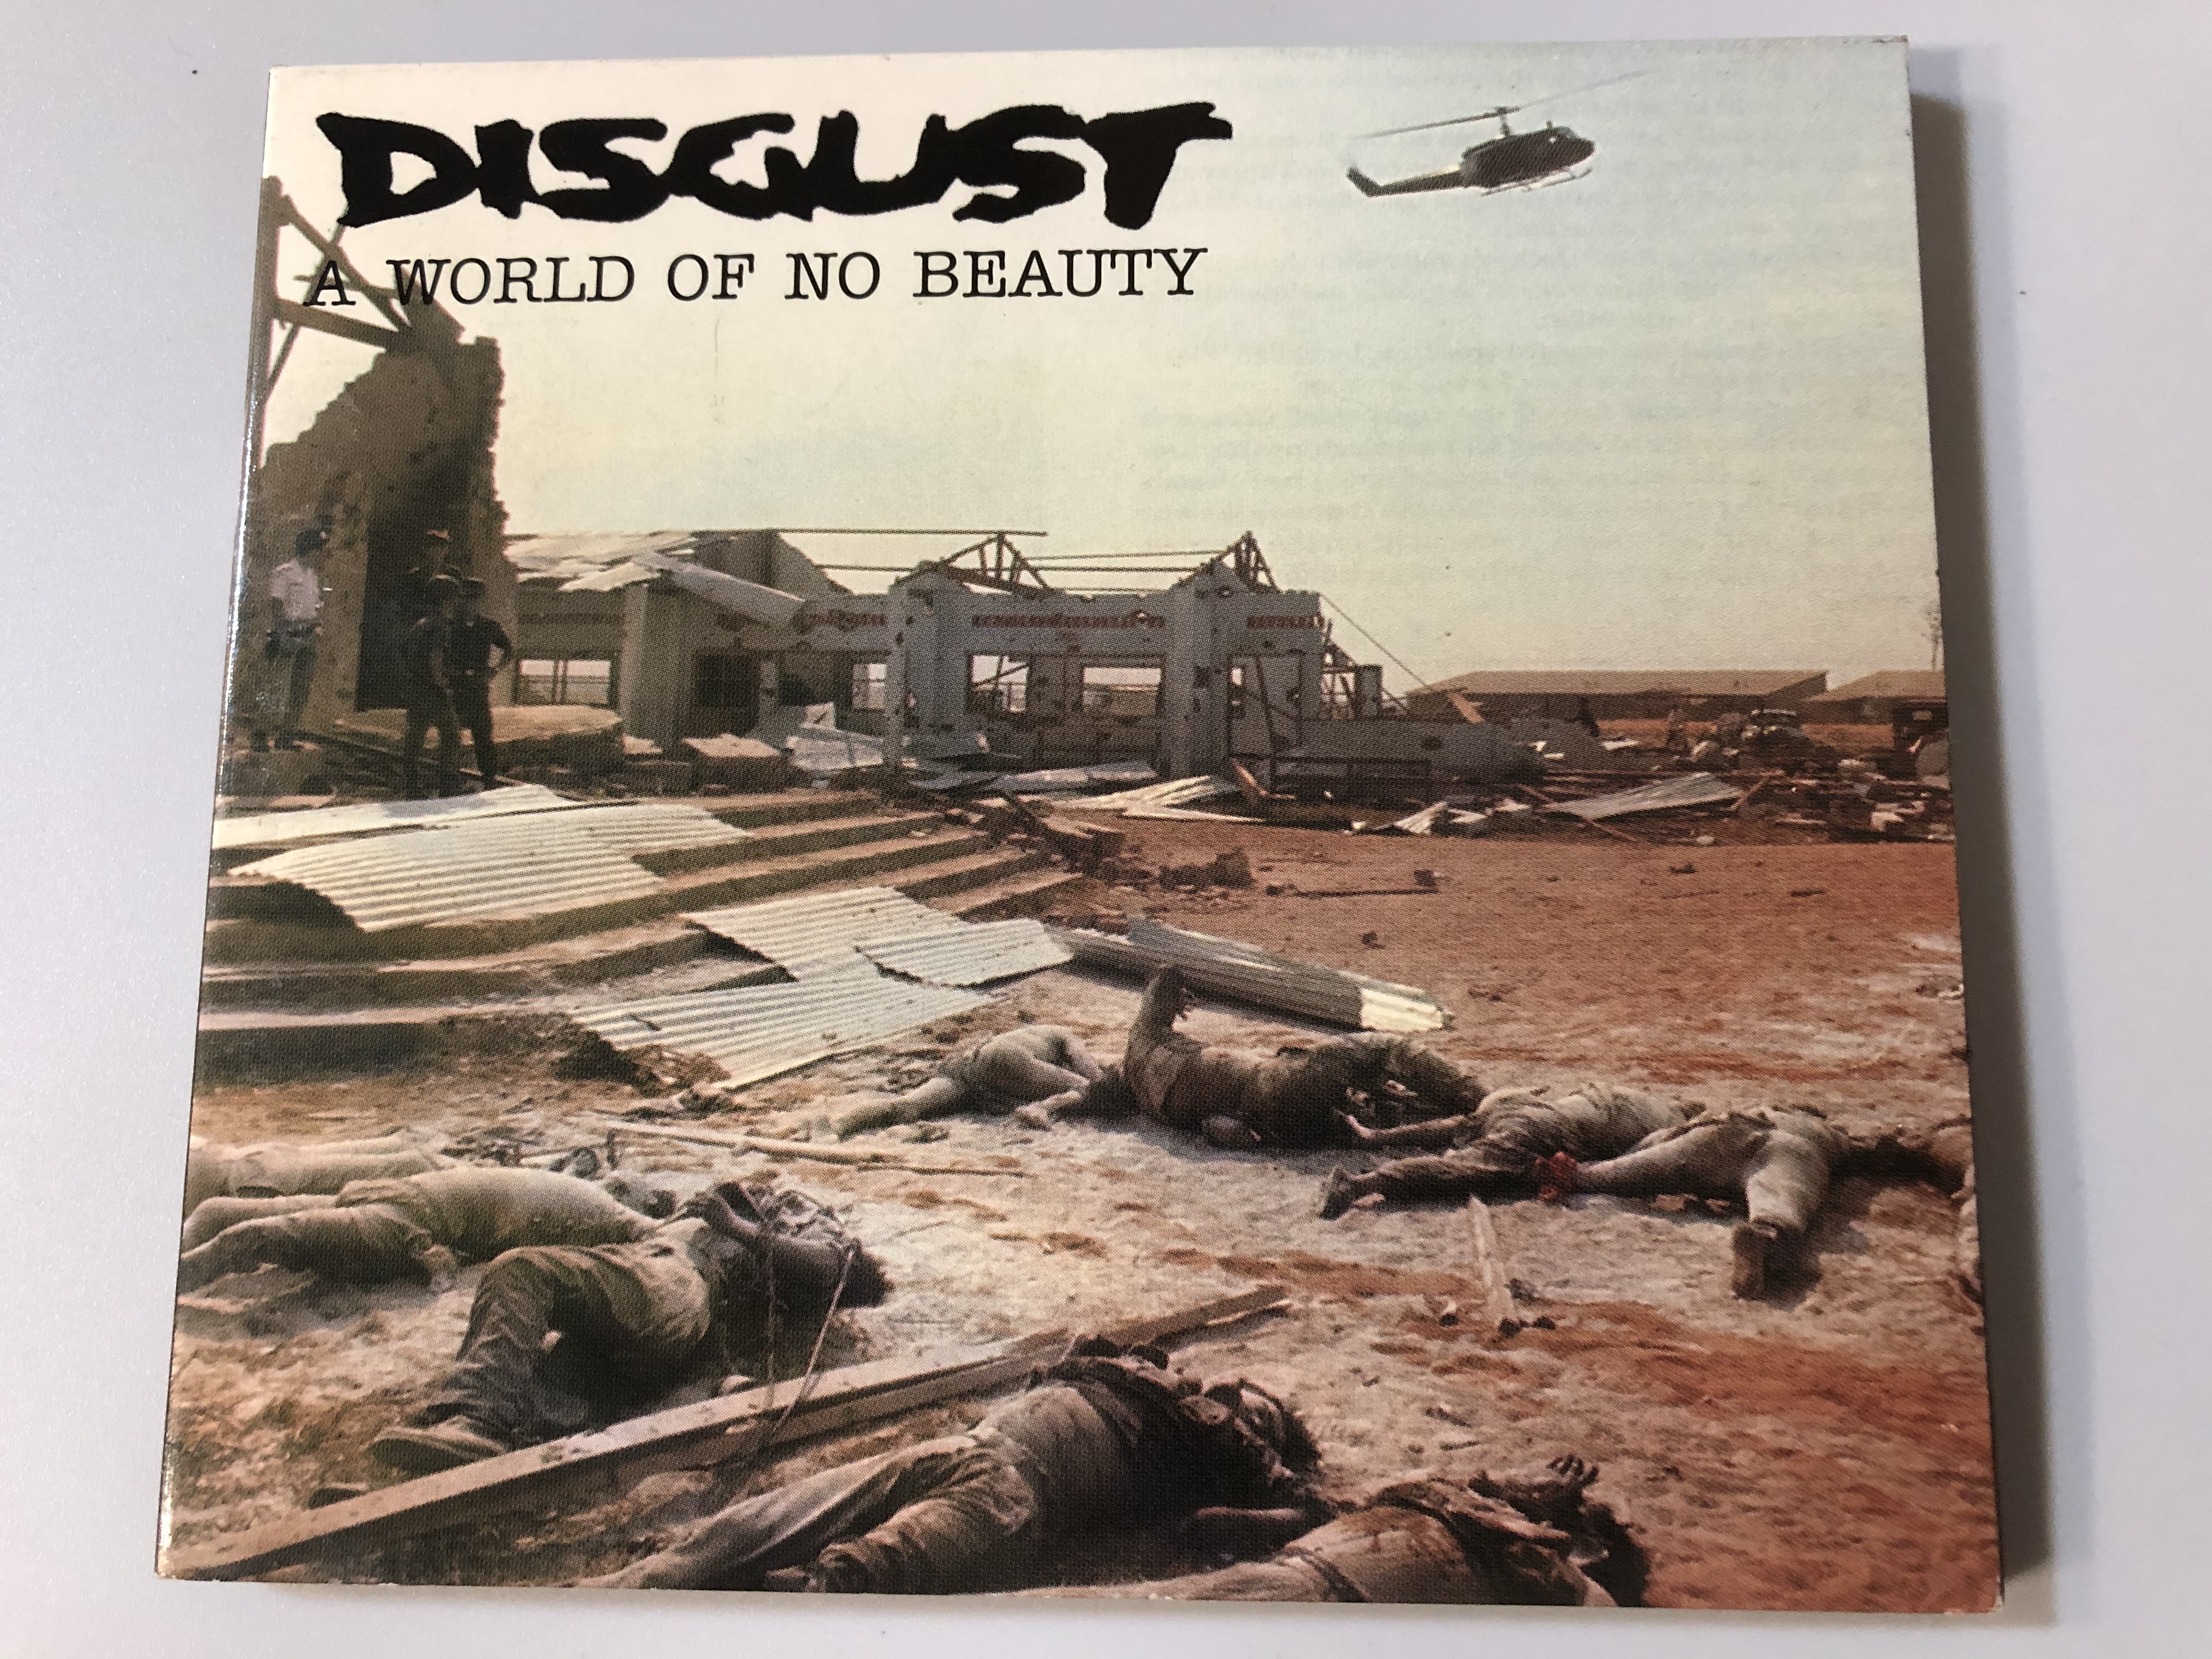 disgust-a-world-of-no-beauty-nuclear-blast-audio-cd-1997-27361-62322-1-.jpg